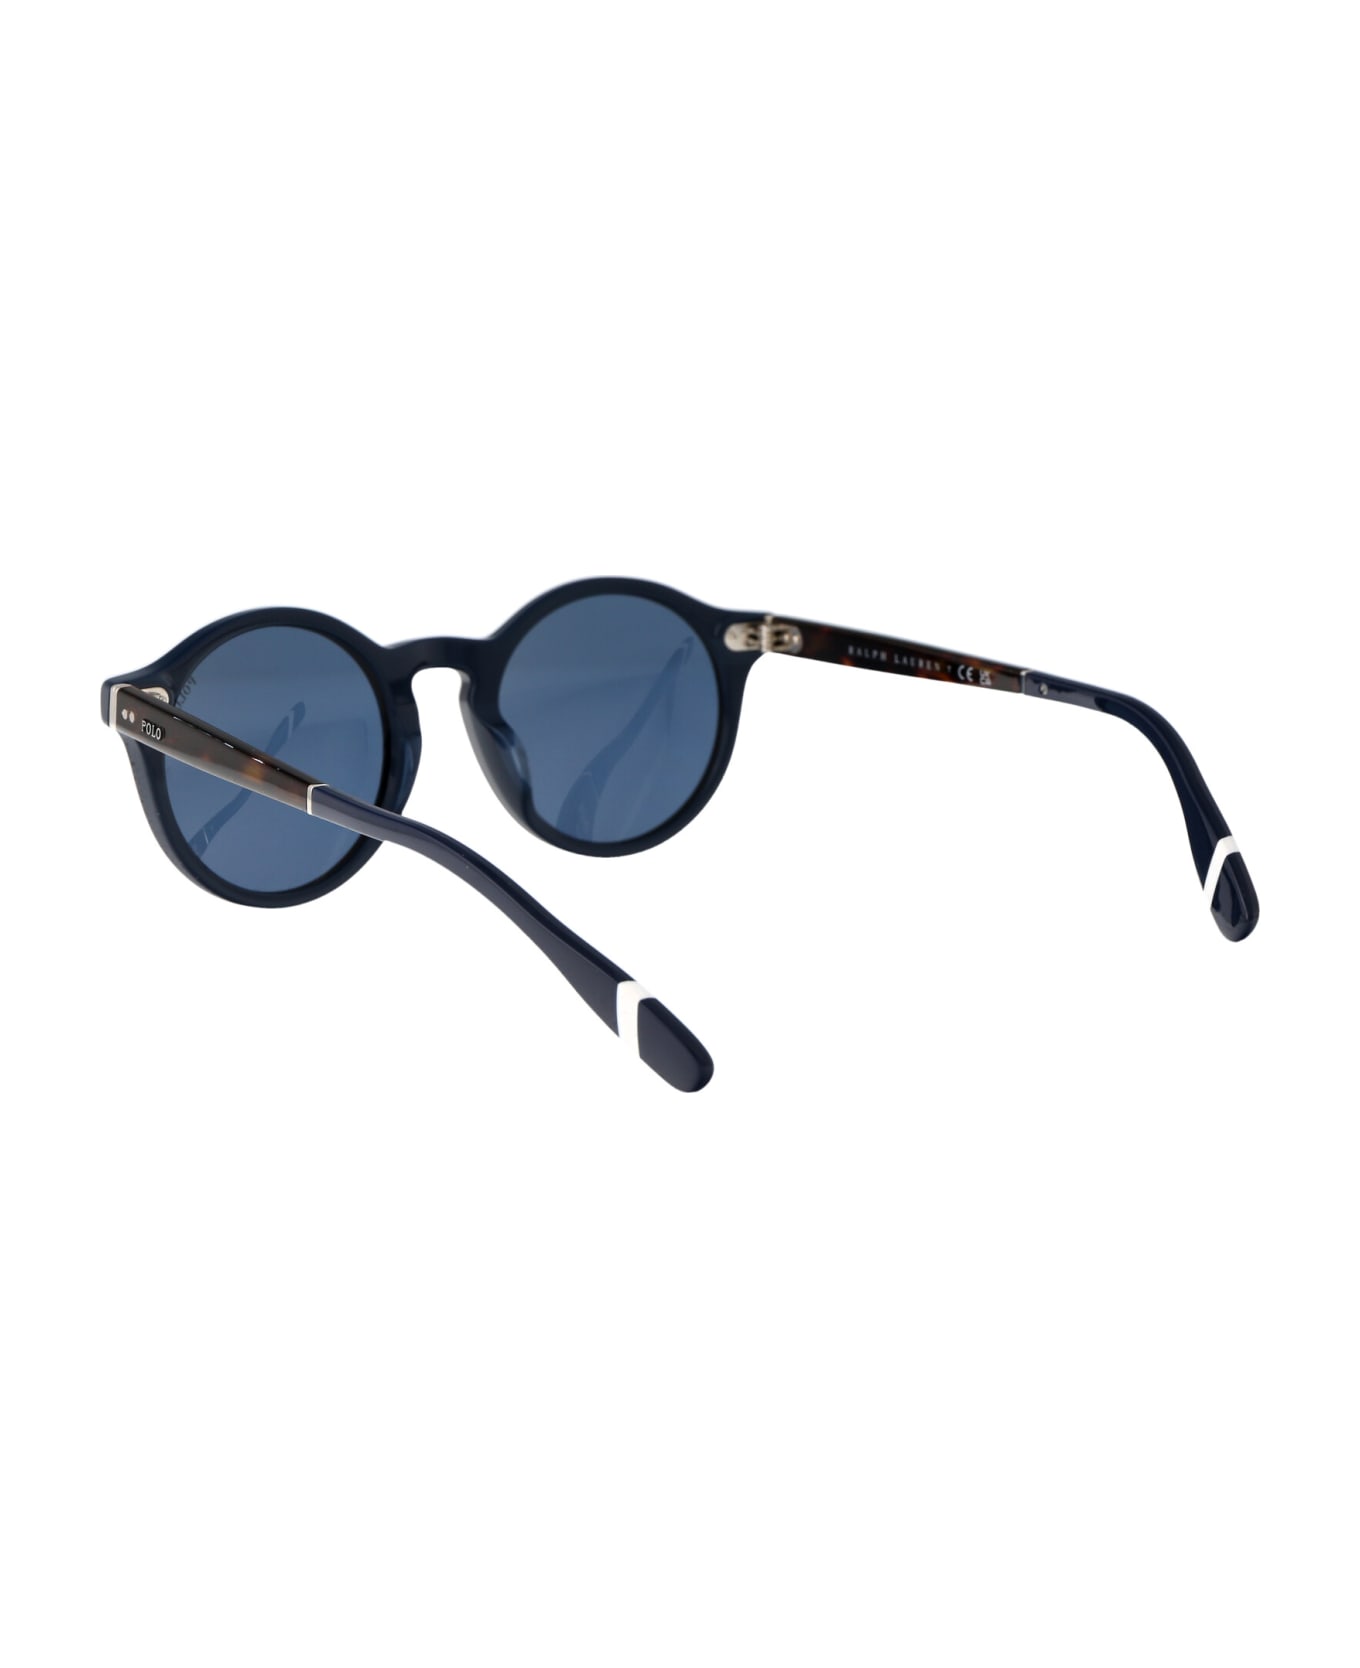 Polo Ralph Lauren 0ph4204u Sunglasses - 546580 Shiny Navy Blue サングラス